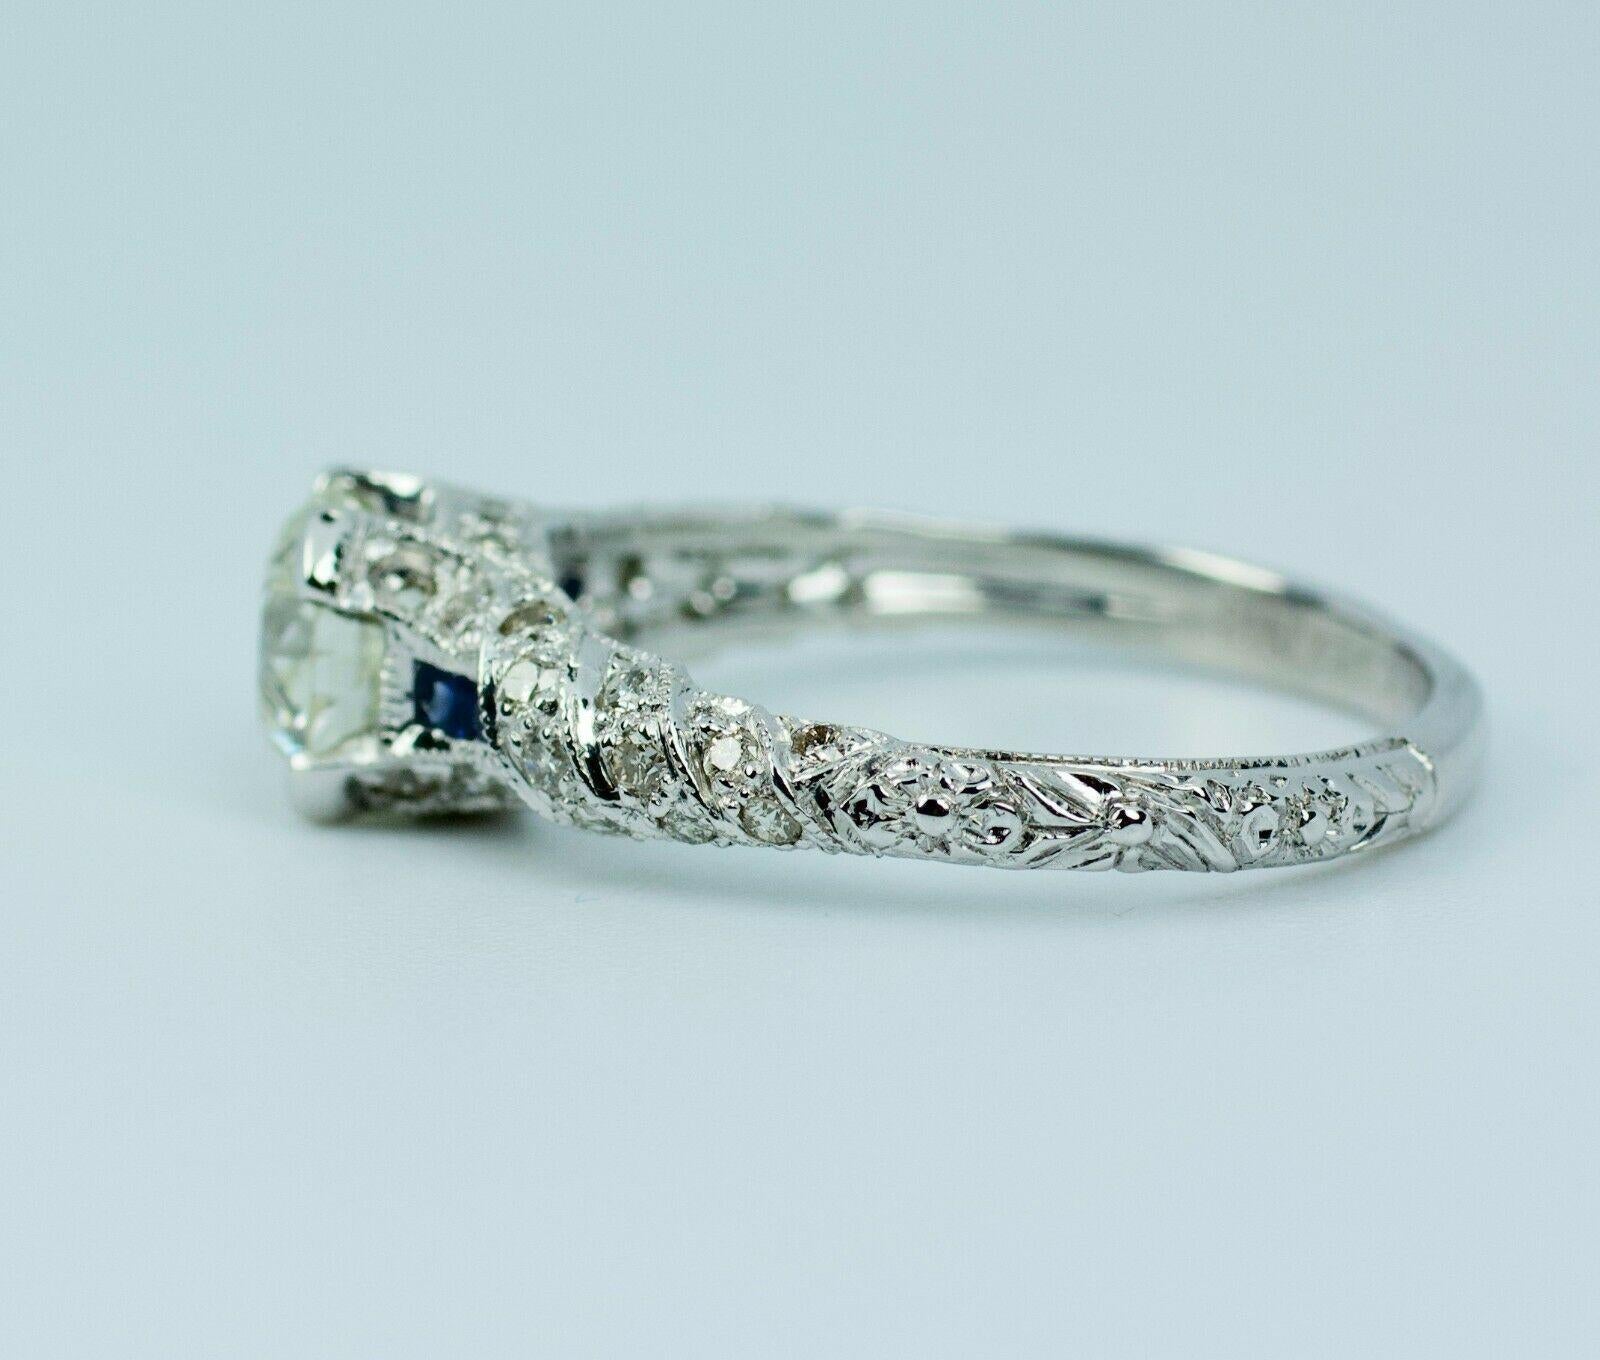 Art Deco Vintage 14k White Gold European Cut Center W/ Sapphire & Single Cut Diamond Ring